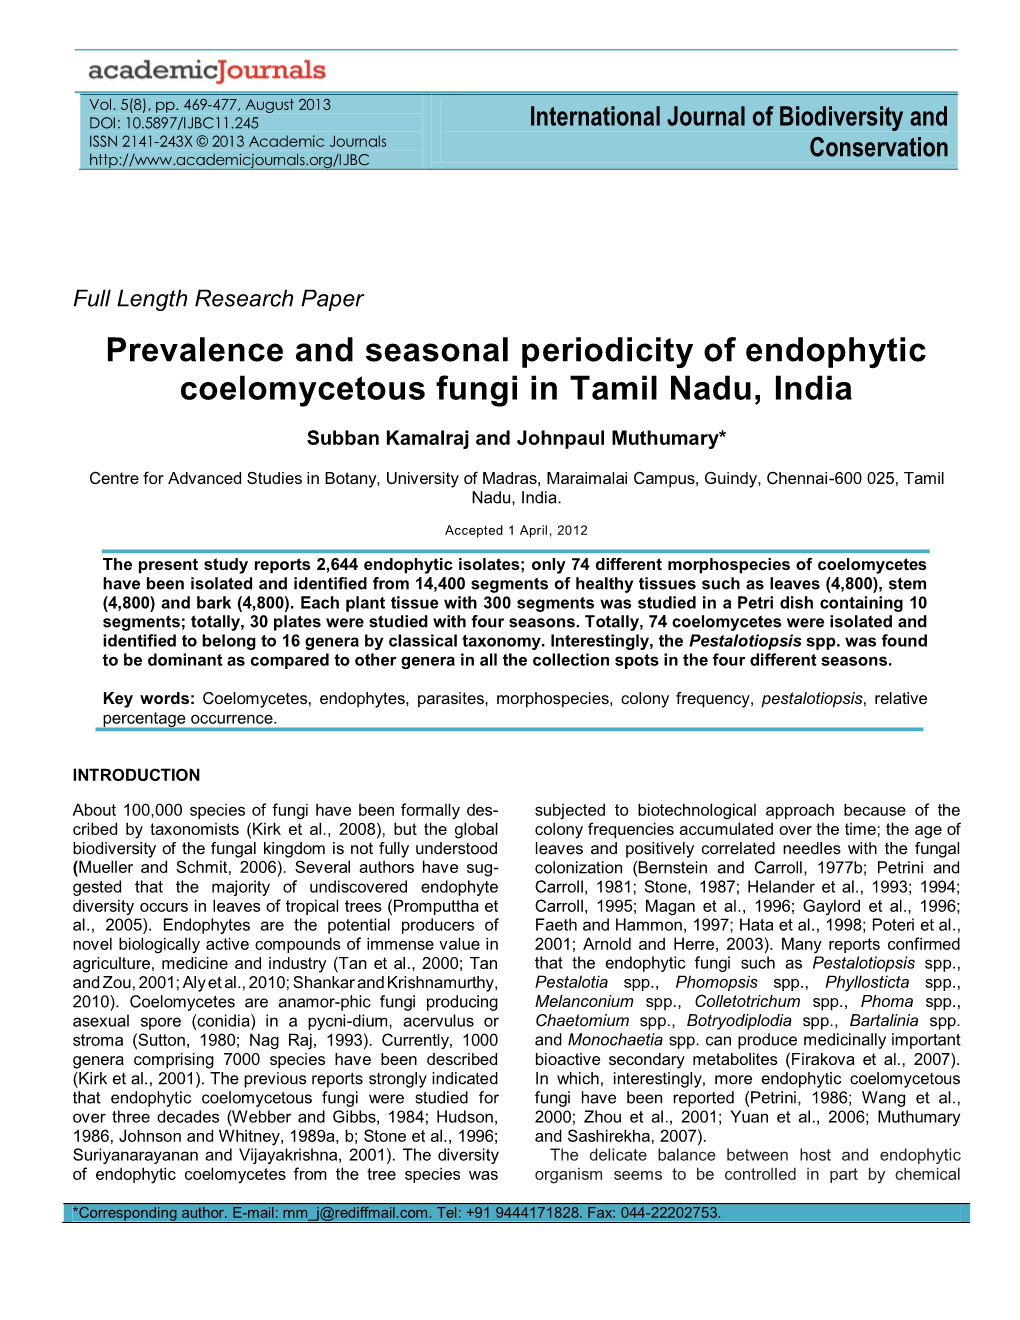 Prevalence and Seasonal Periodicity of Endophytic Coelomycetous Fungi in Tamil Nadu, India